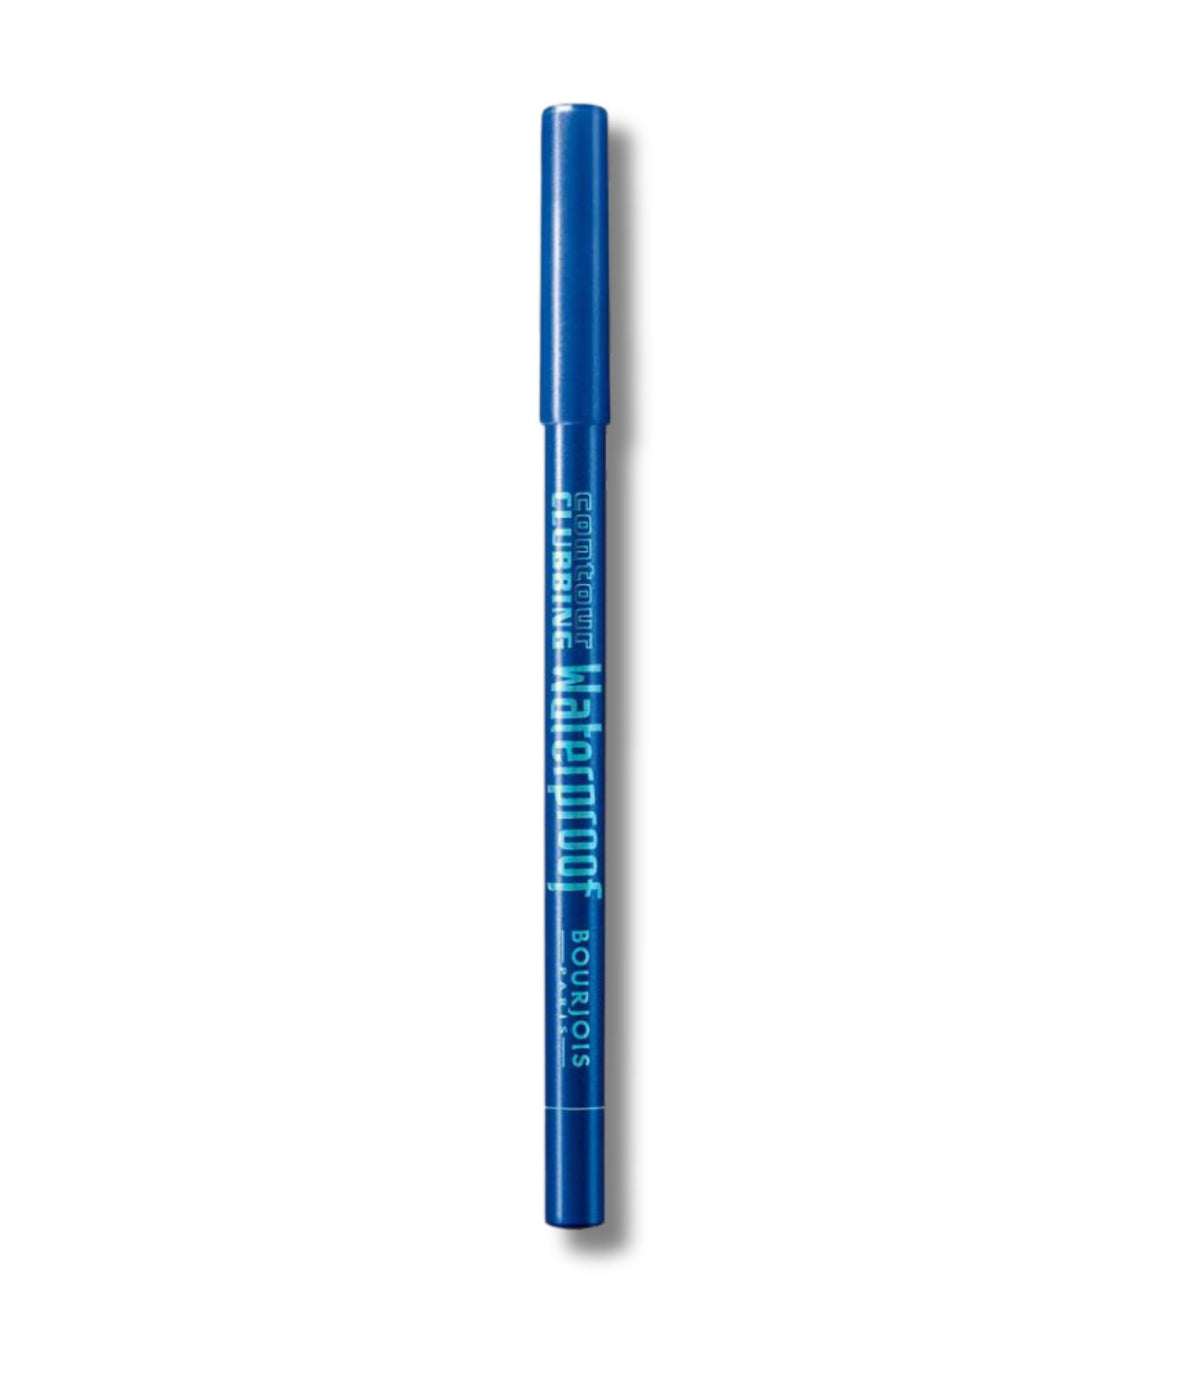 Contour Clubbing Waterproof Eye Pencil - 46 Blue Neon